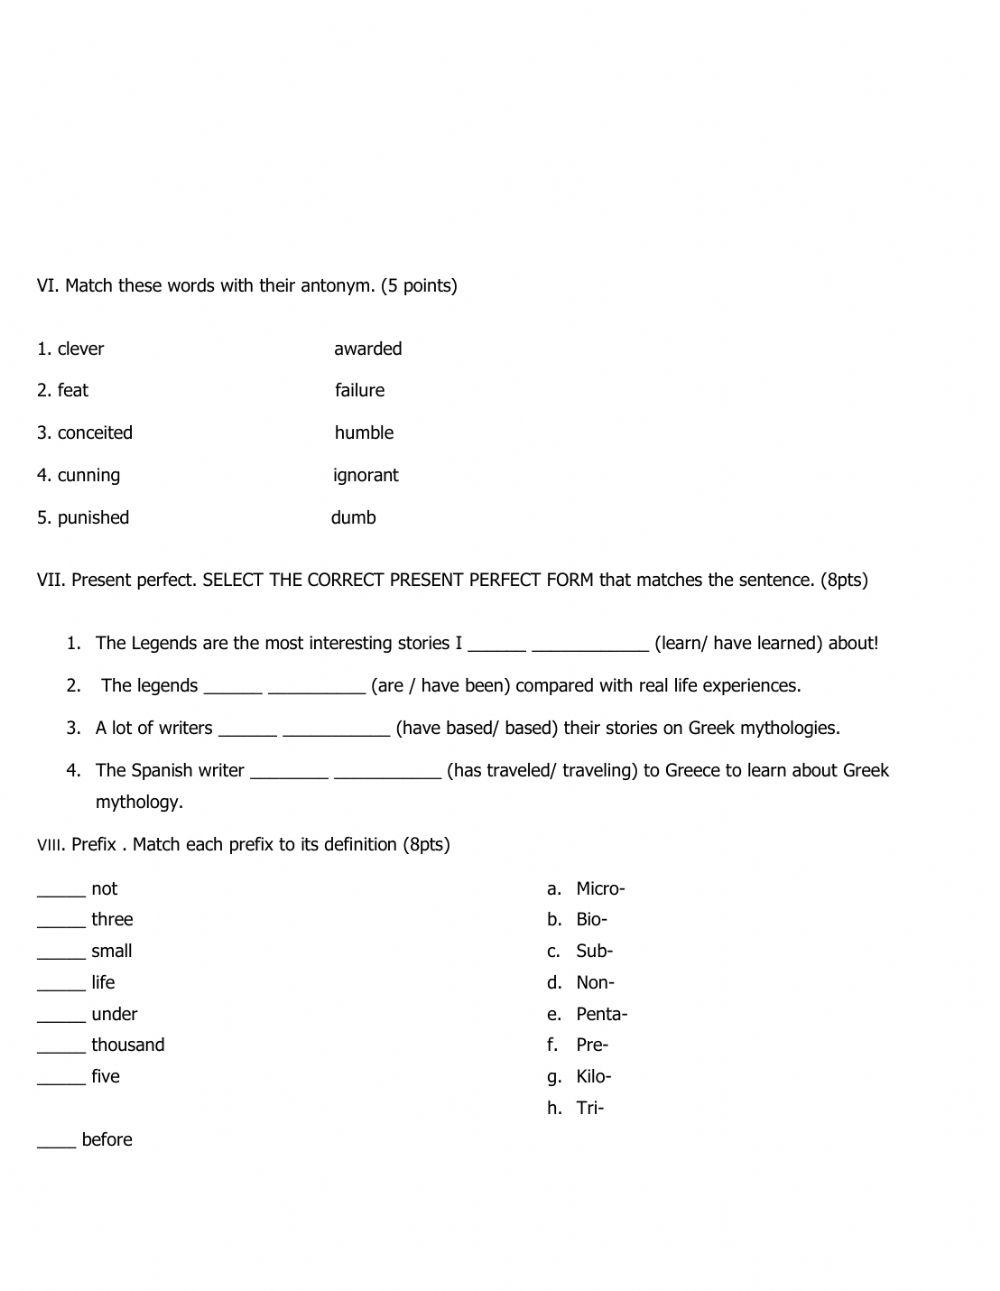 Language exam term 1